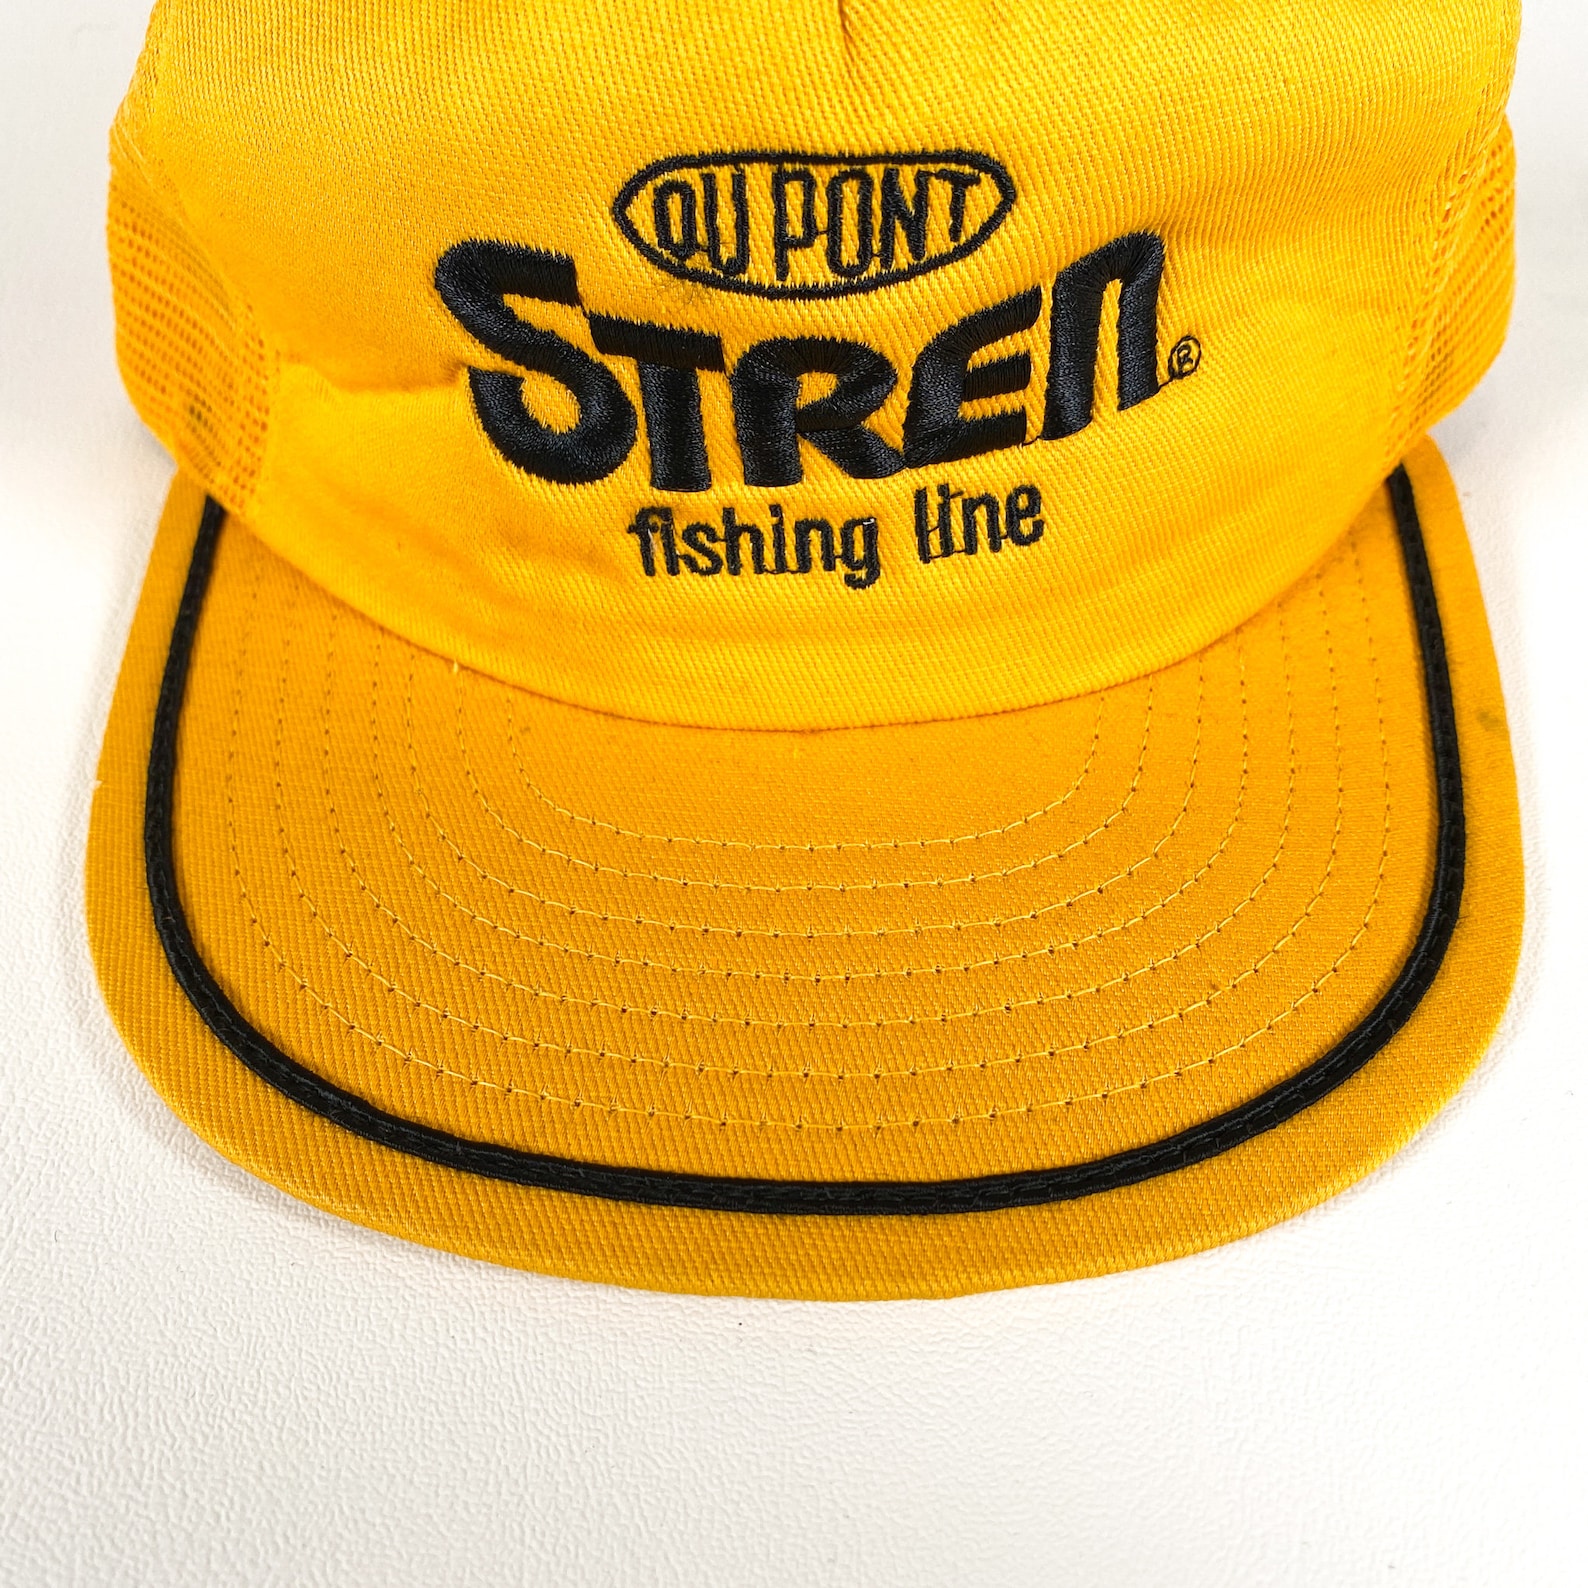 Vintage Stren fishing hat 80s stren fly fishing hat